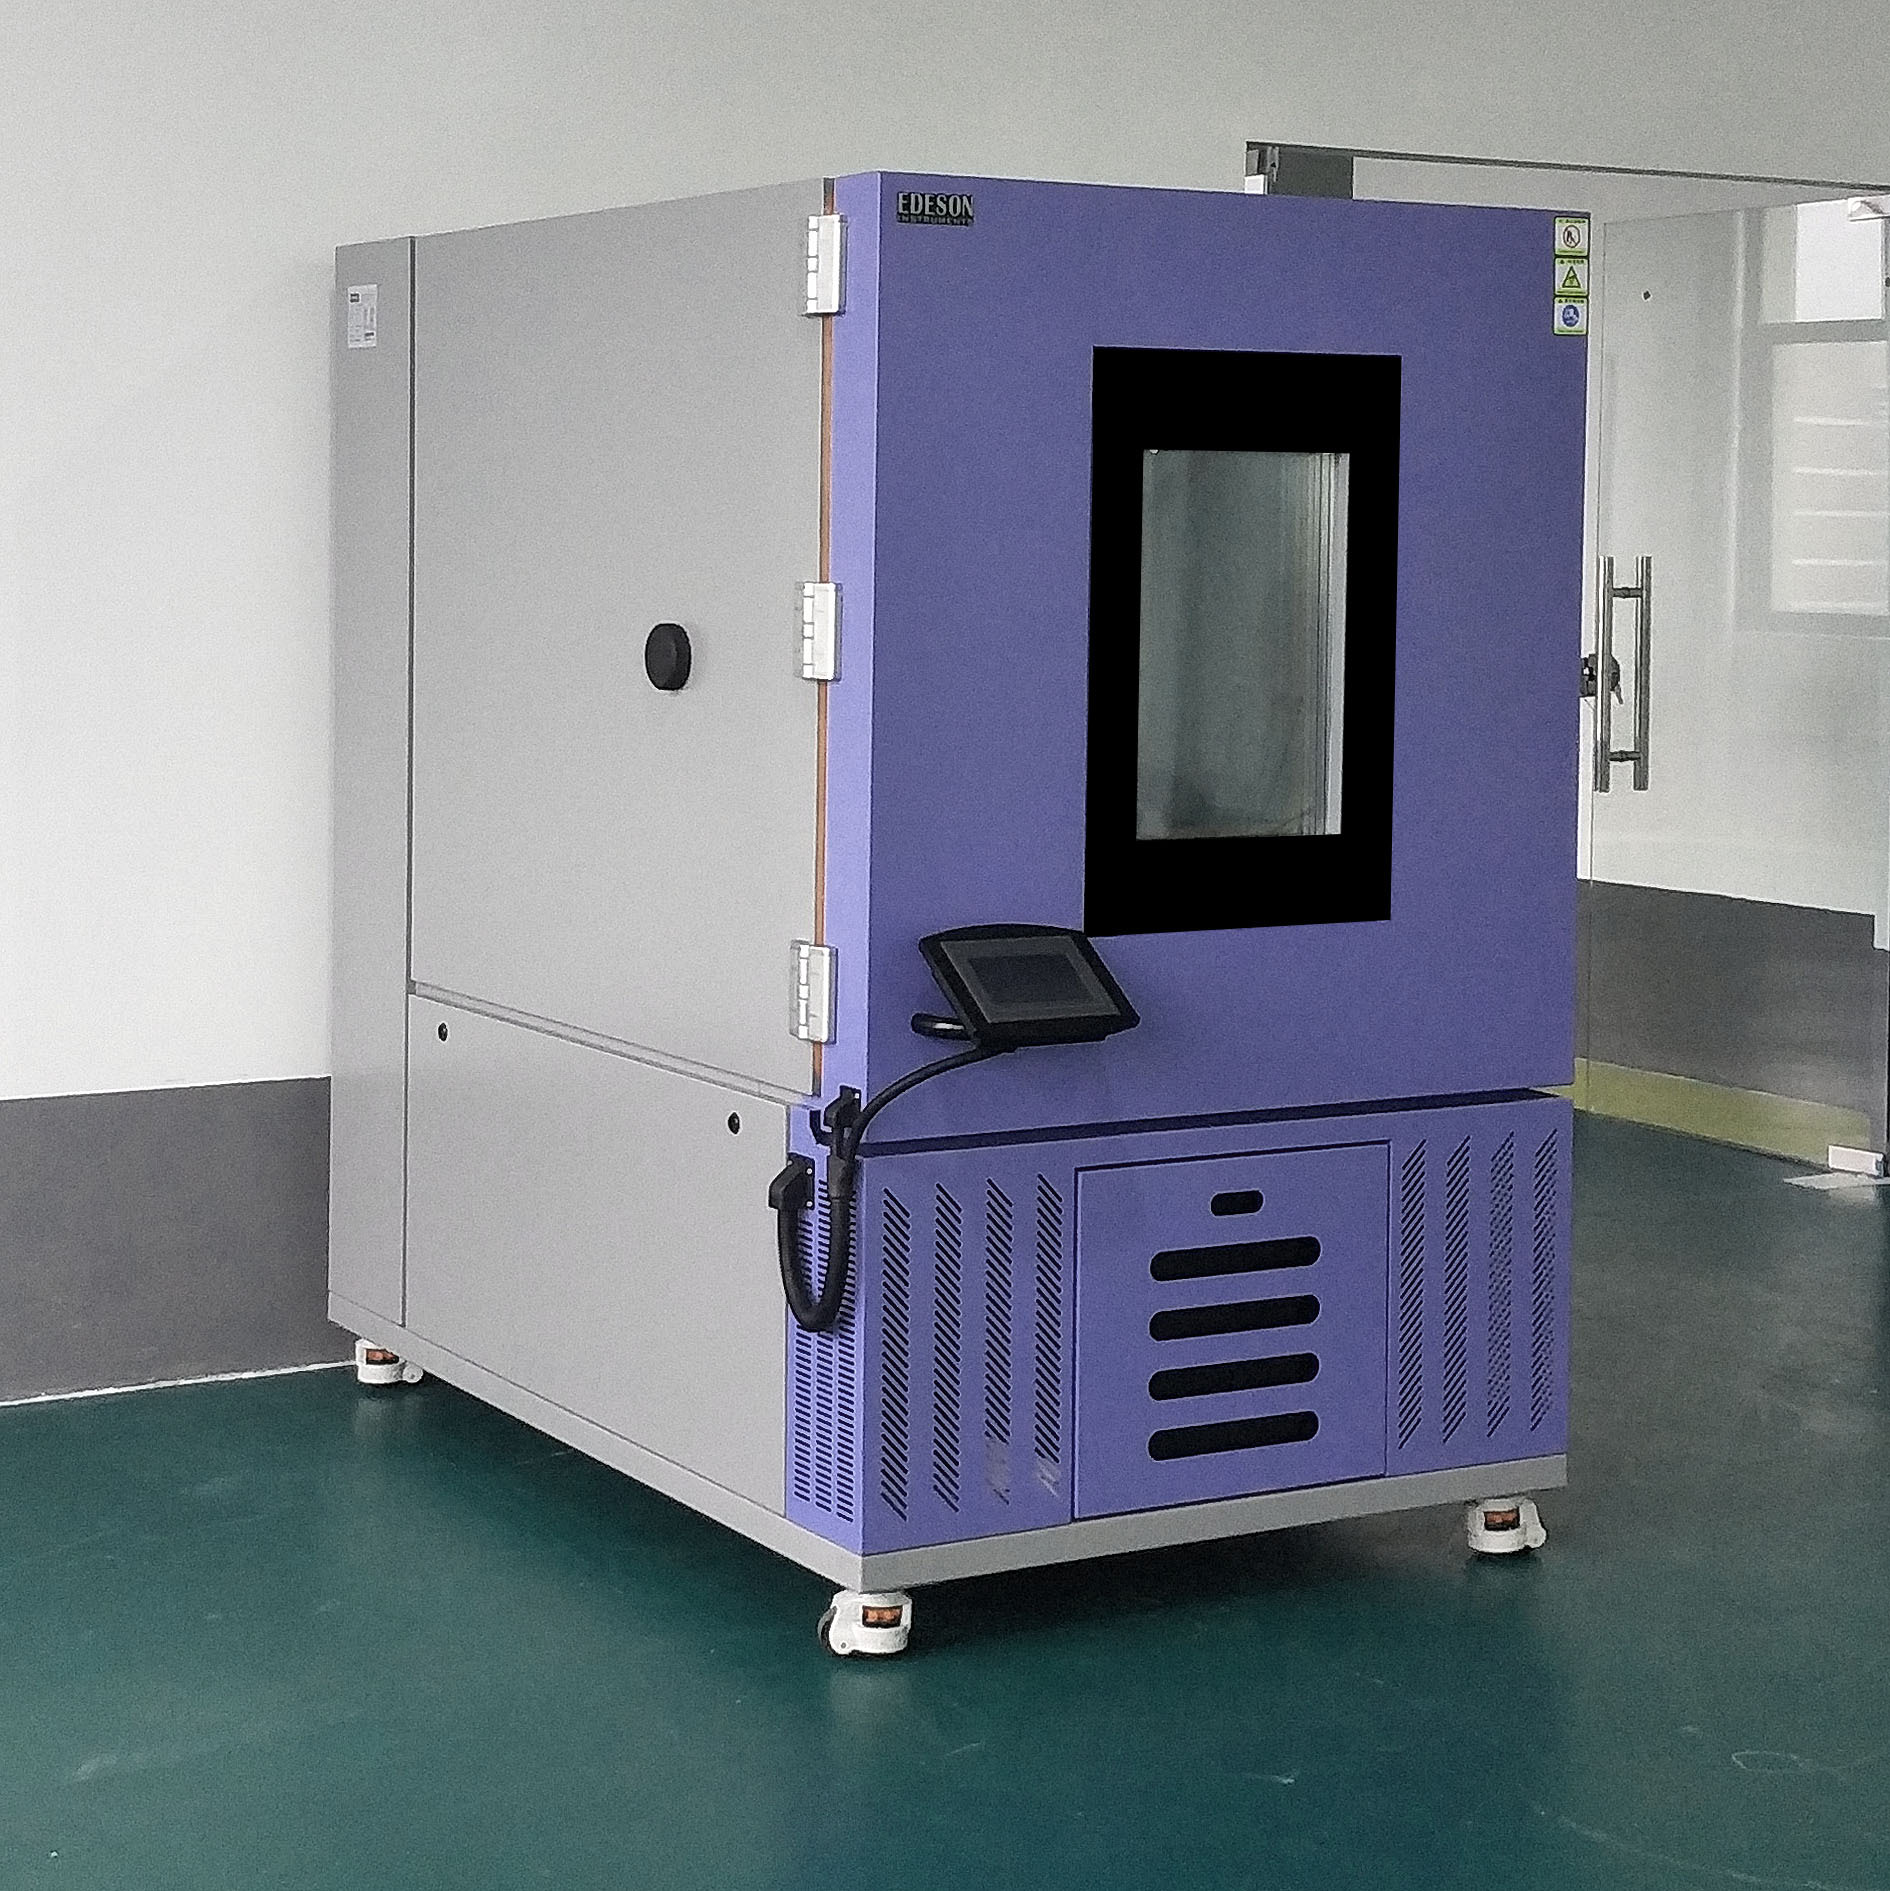 Edeson高低温交变试验箱 ECT-1000LC